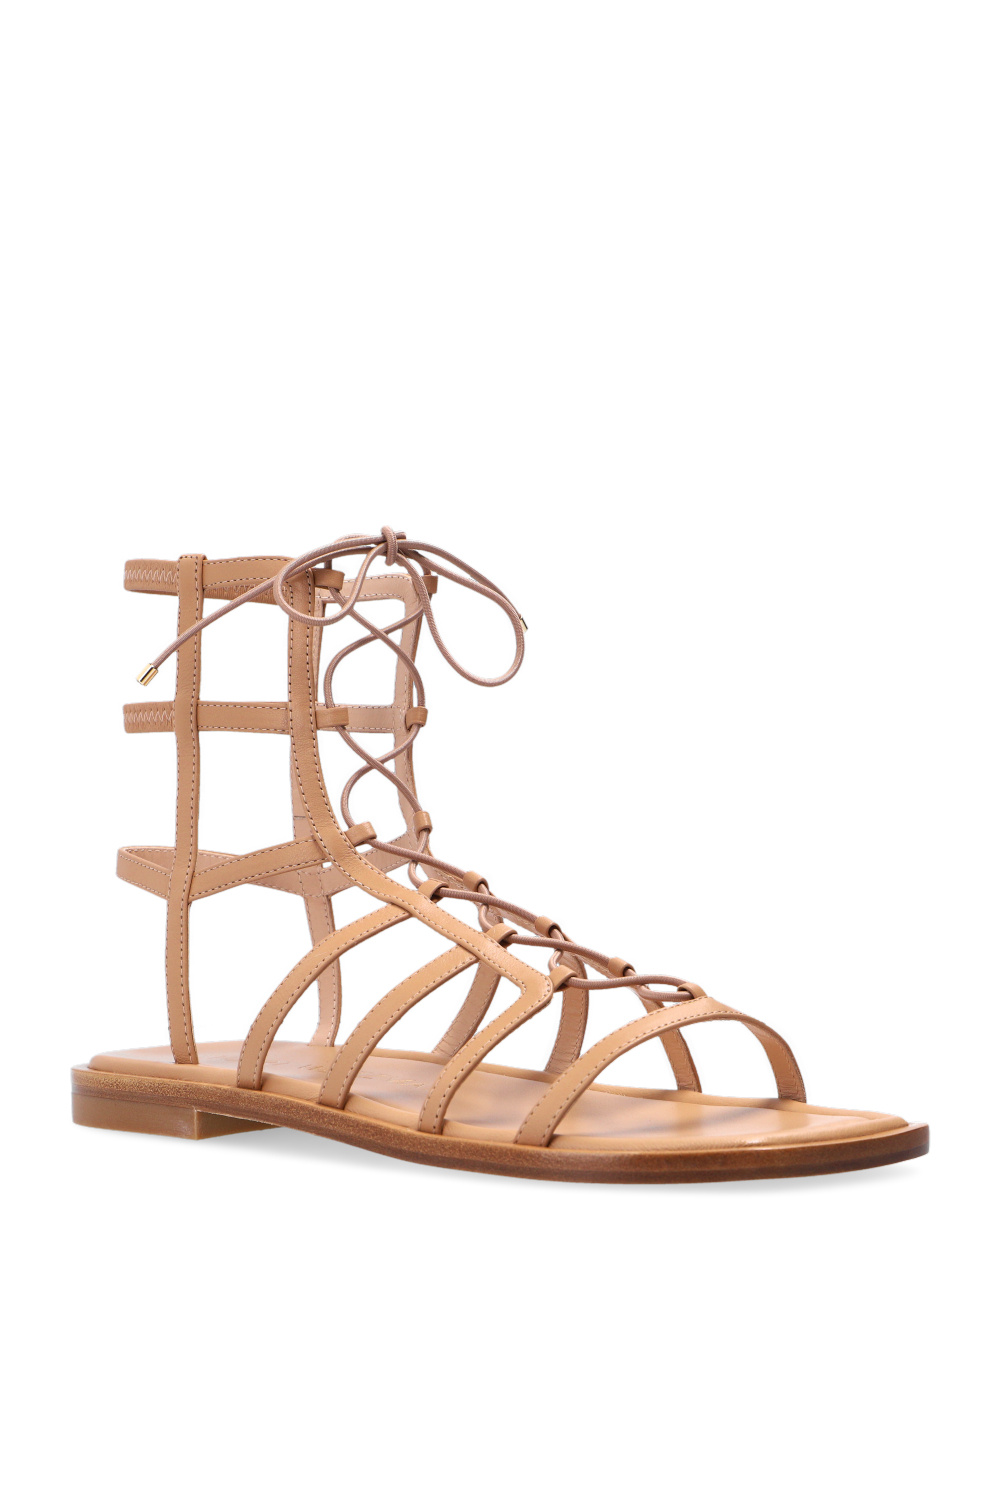 Stuart Weitzman ‘Kora’ sandals